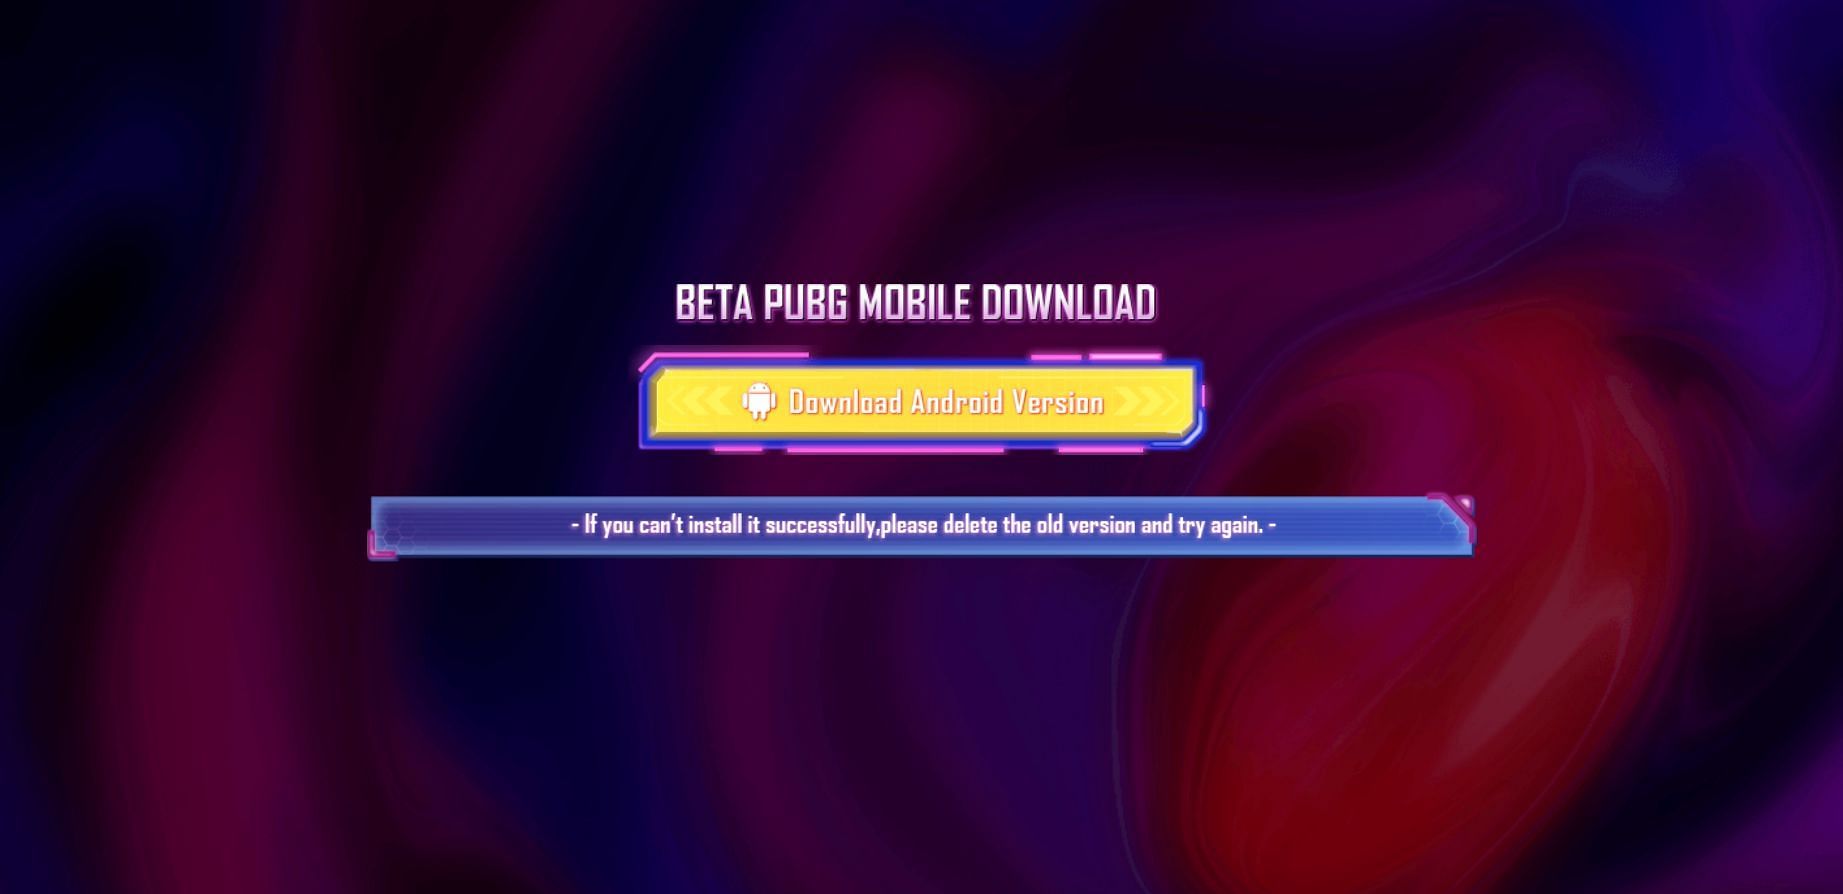 PUBG Mobile beta download link (Image via Garena)